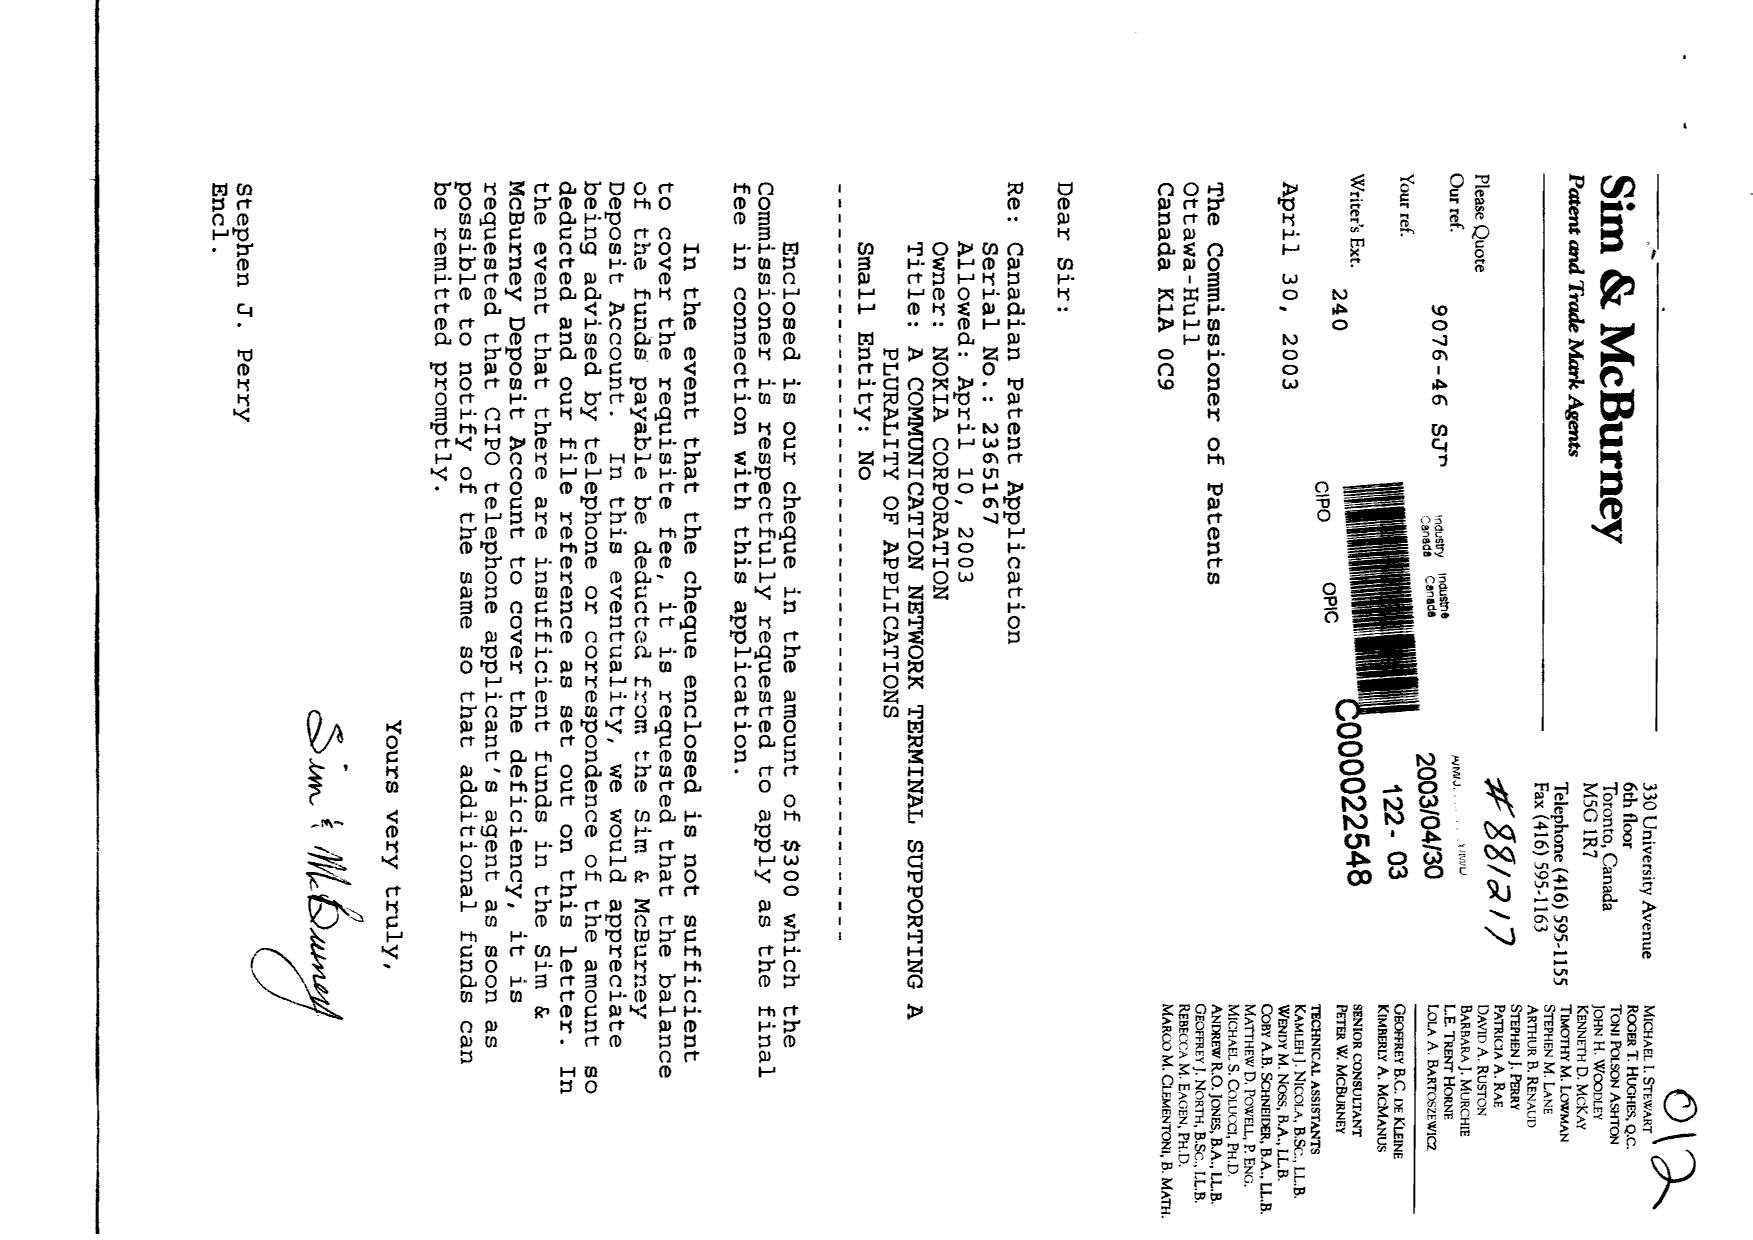 Canadian Patent Document 2365167. Correspondence 20030430. Image 1 of 1